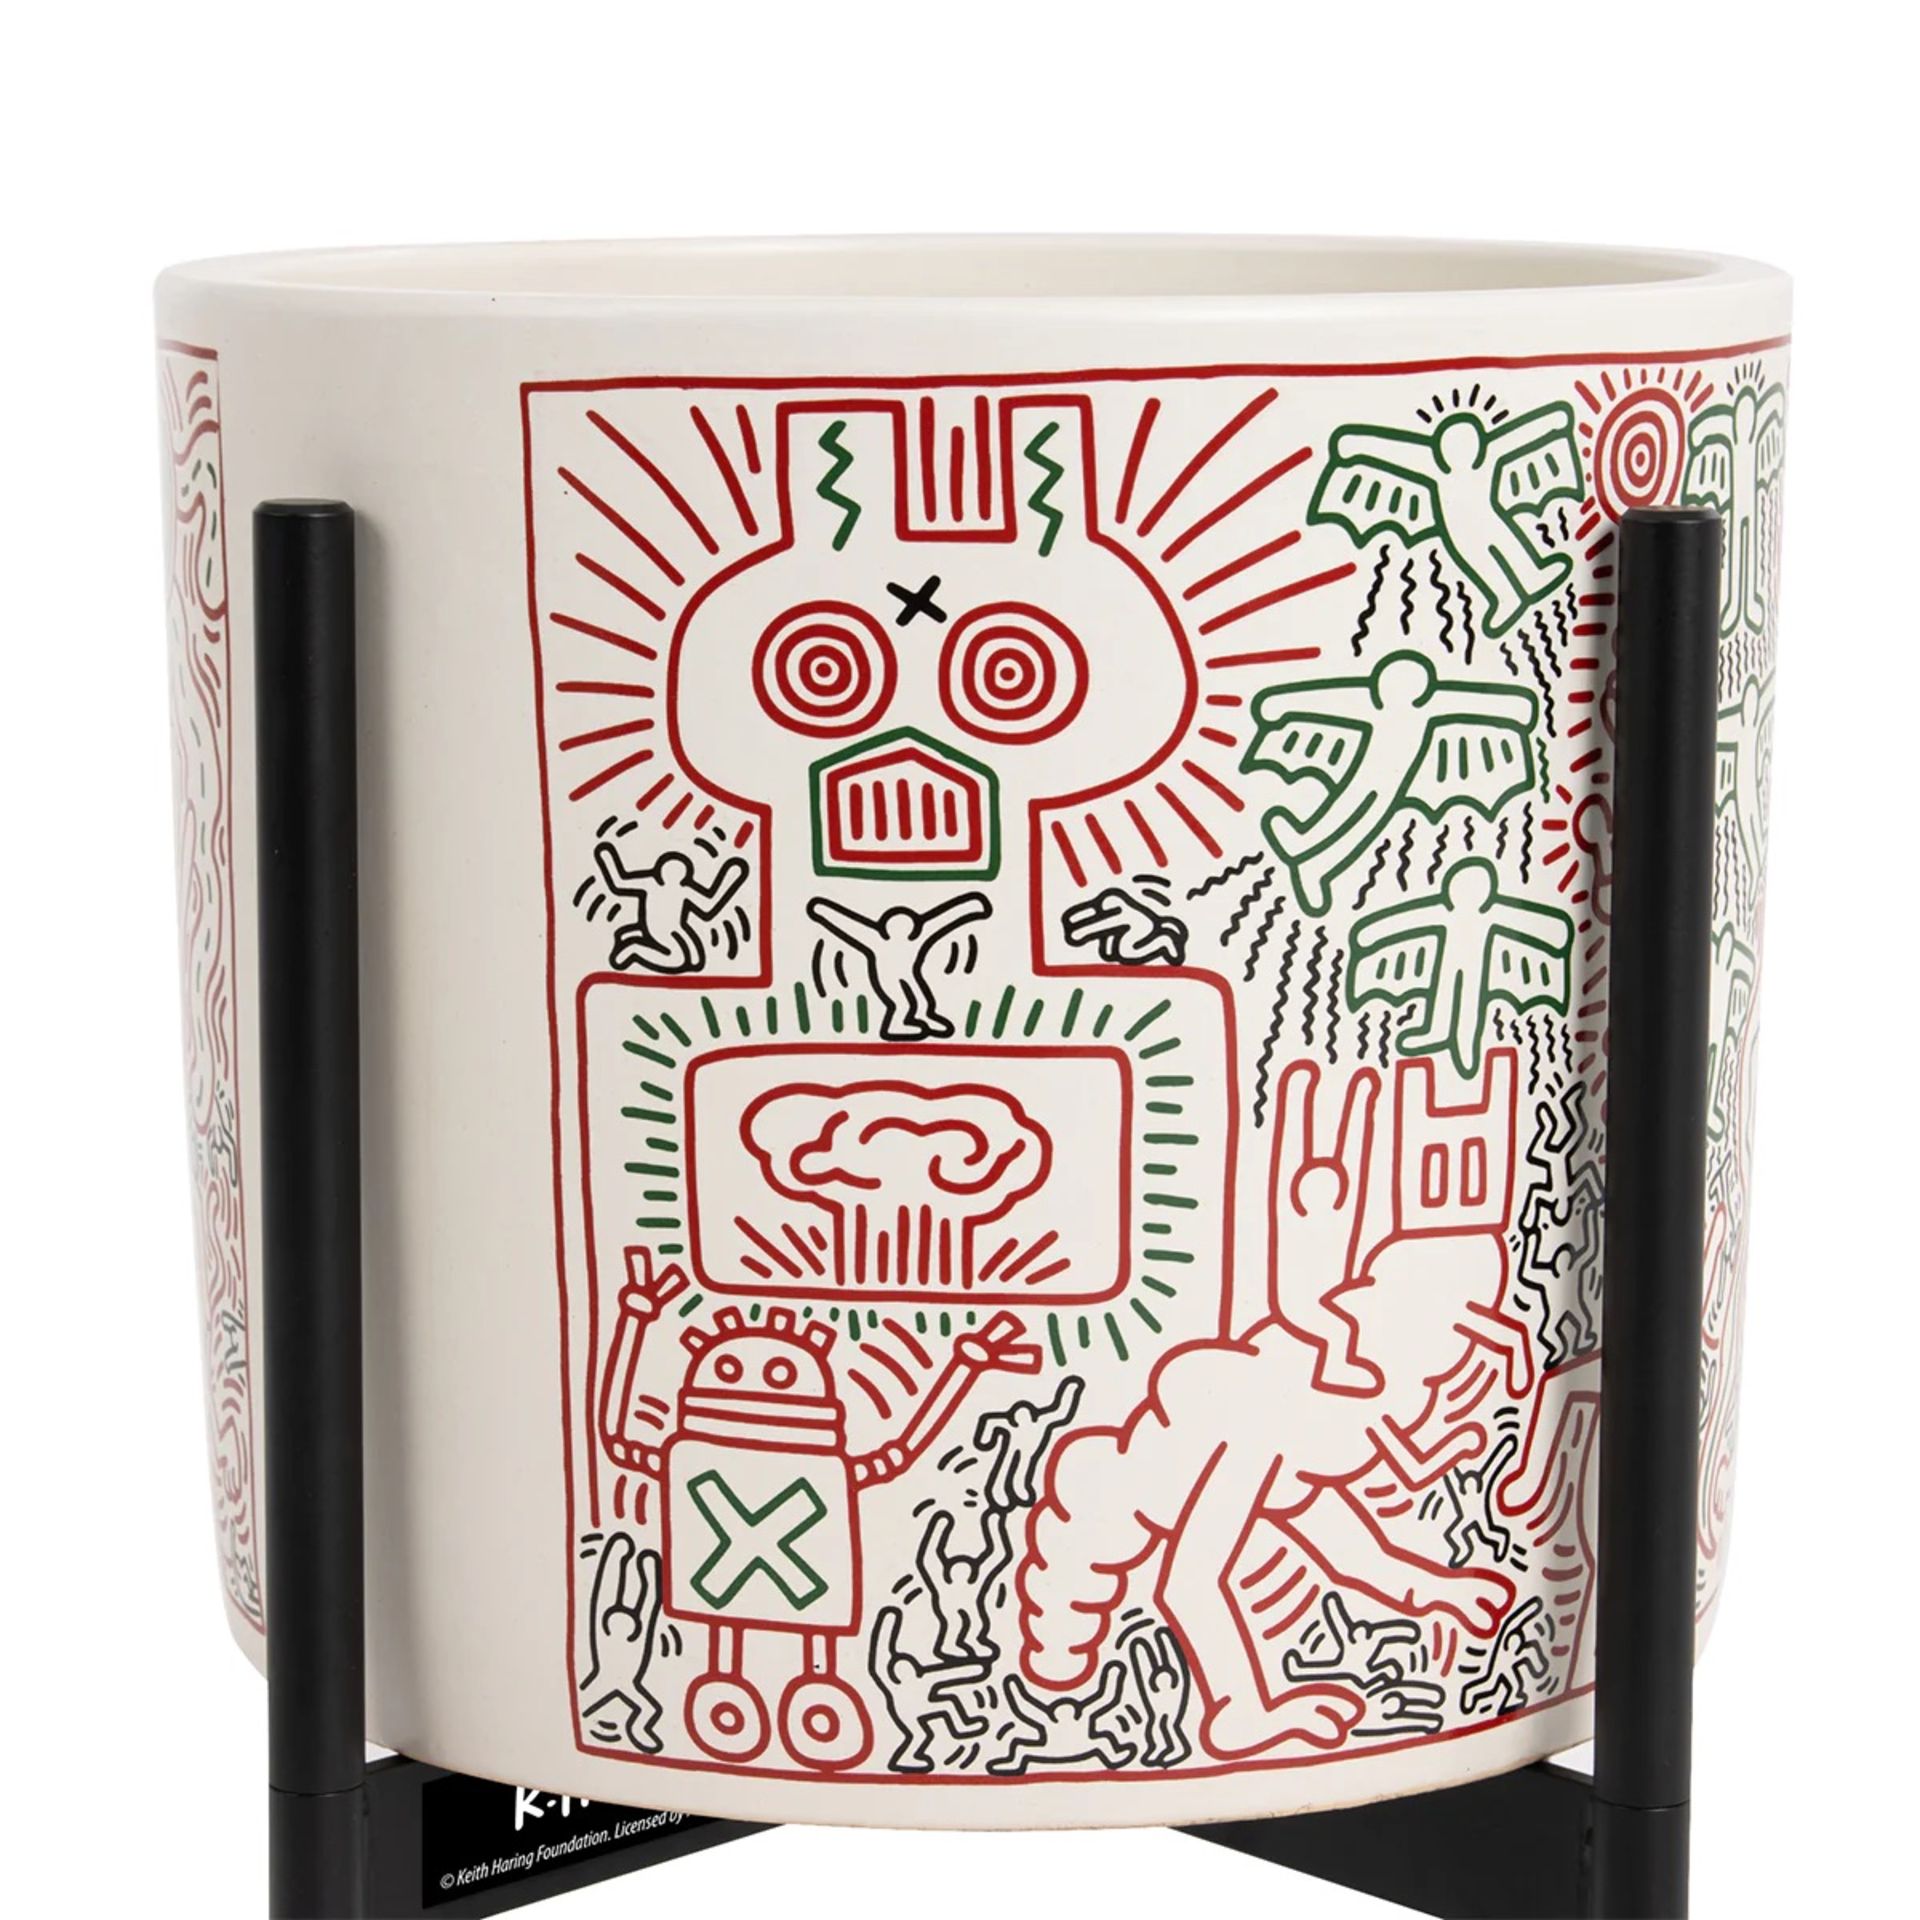 Keith Haring "Untitled, 1983" Ceramic